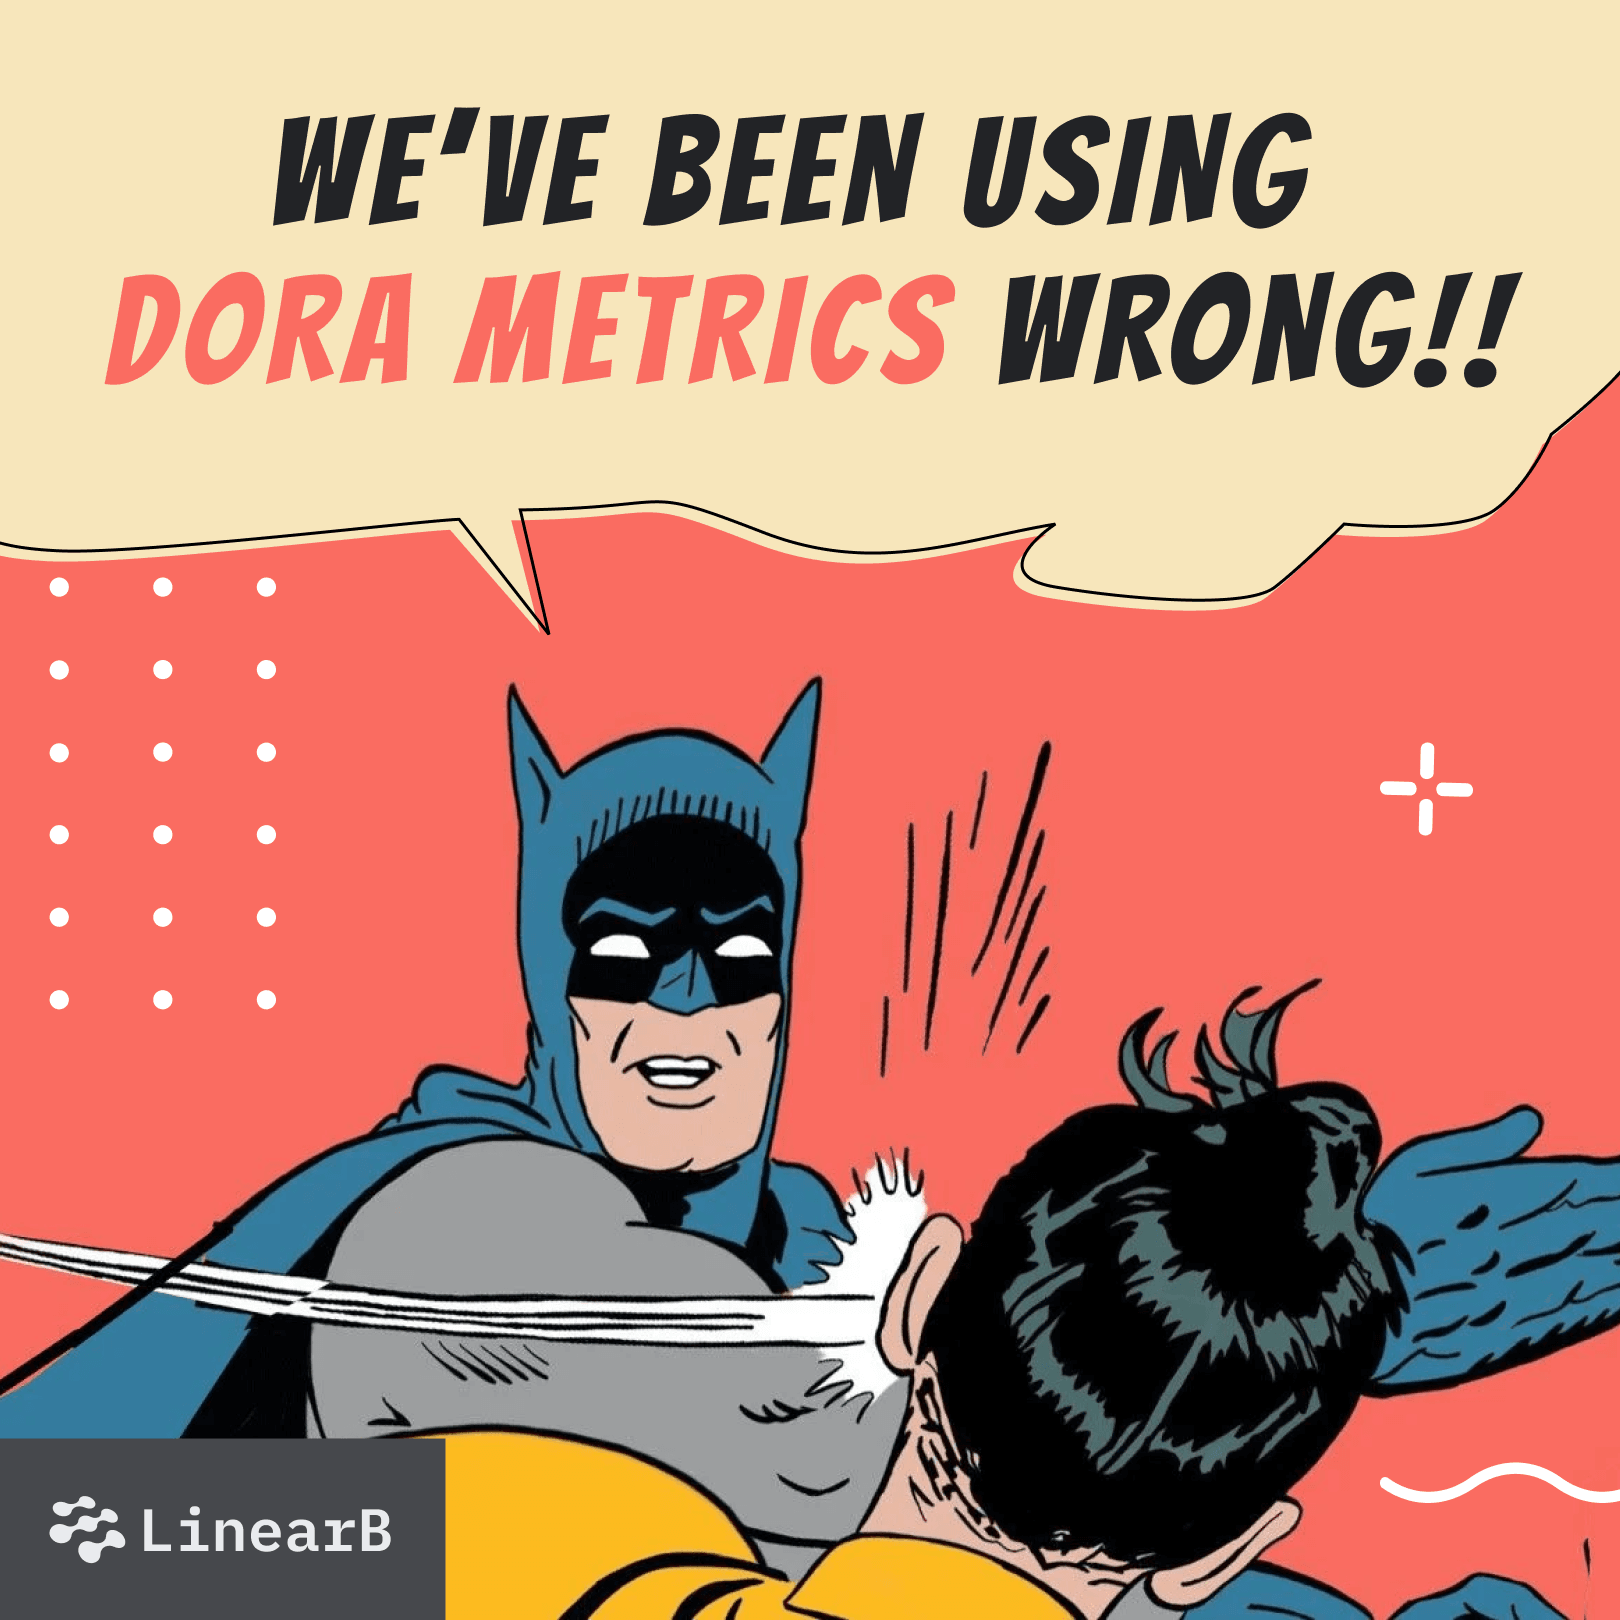 Dora_Metrics_Wrong_1080x1080_6004d645b8